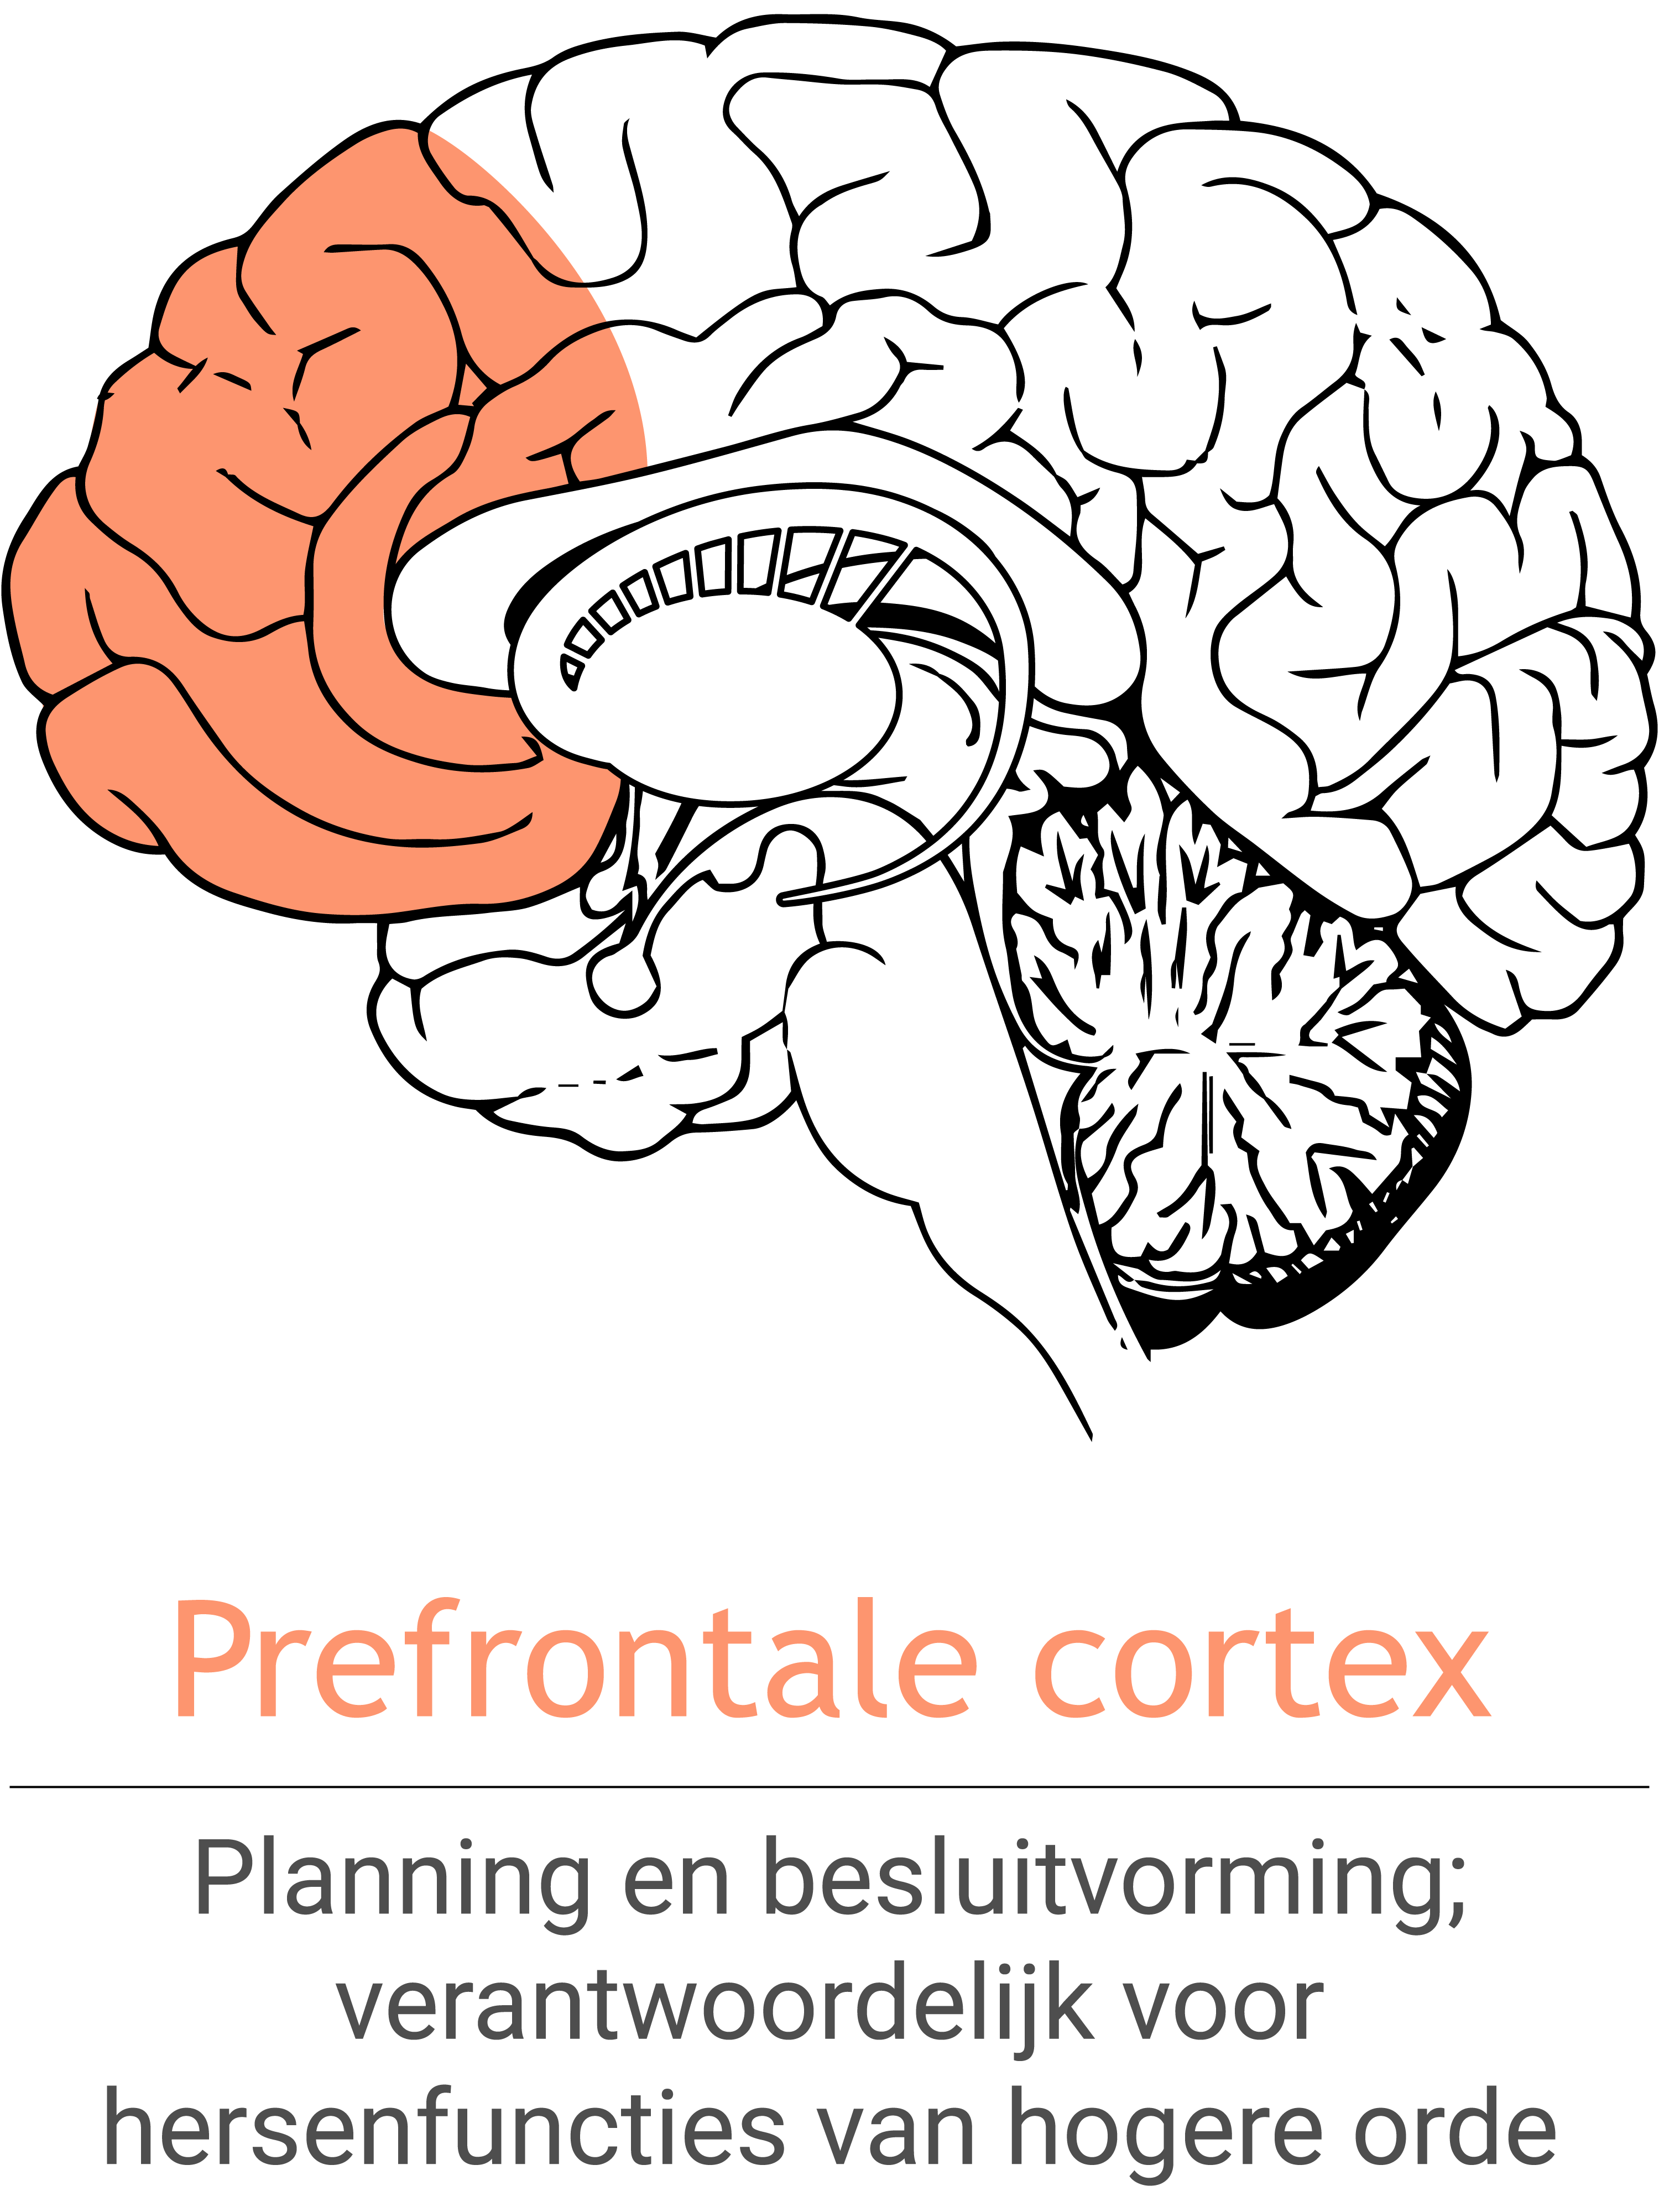 MSH_prefrontalCortex_NL